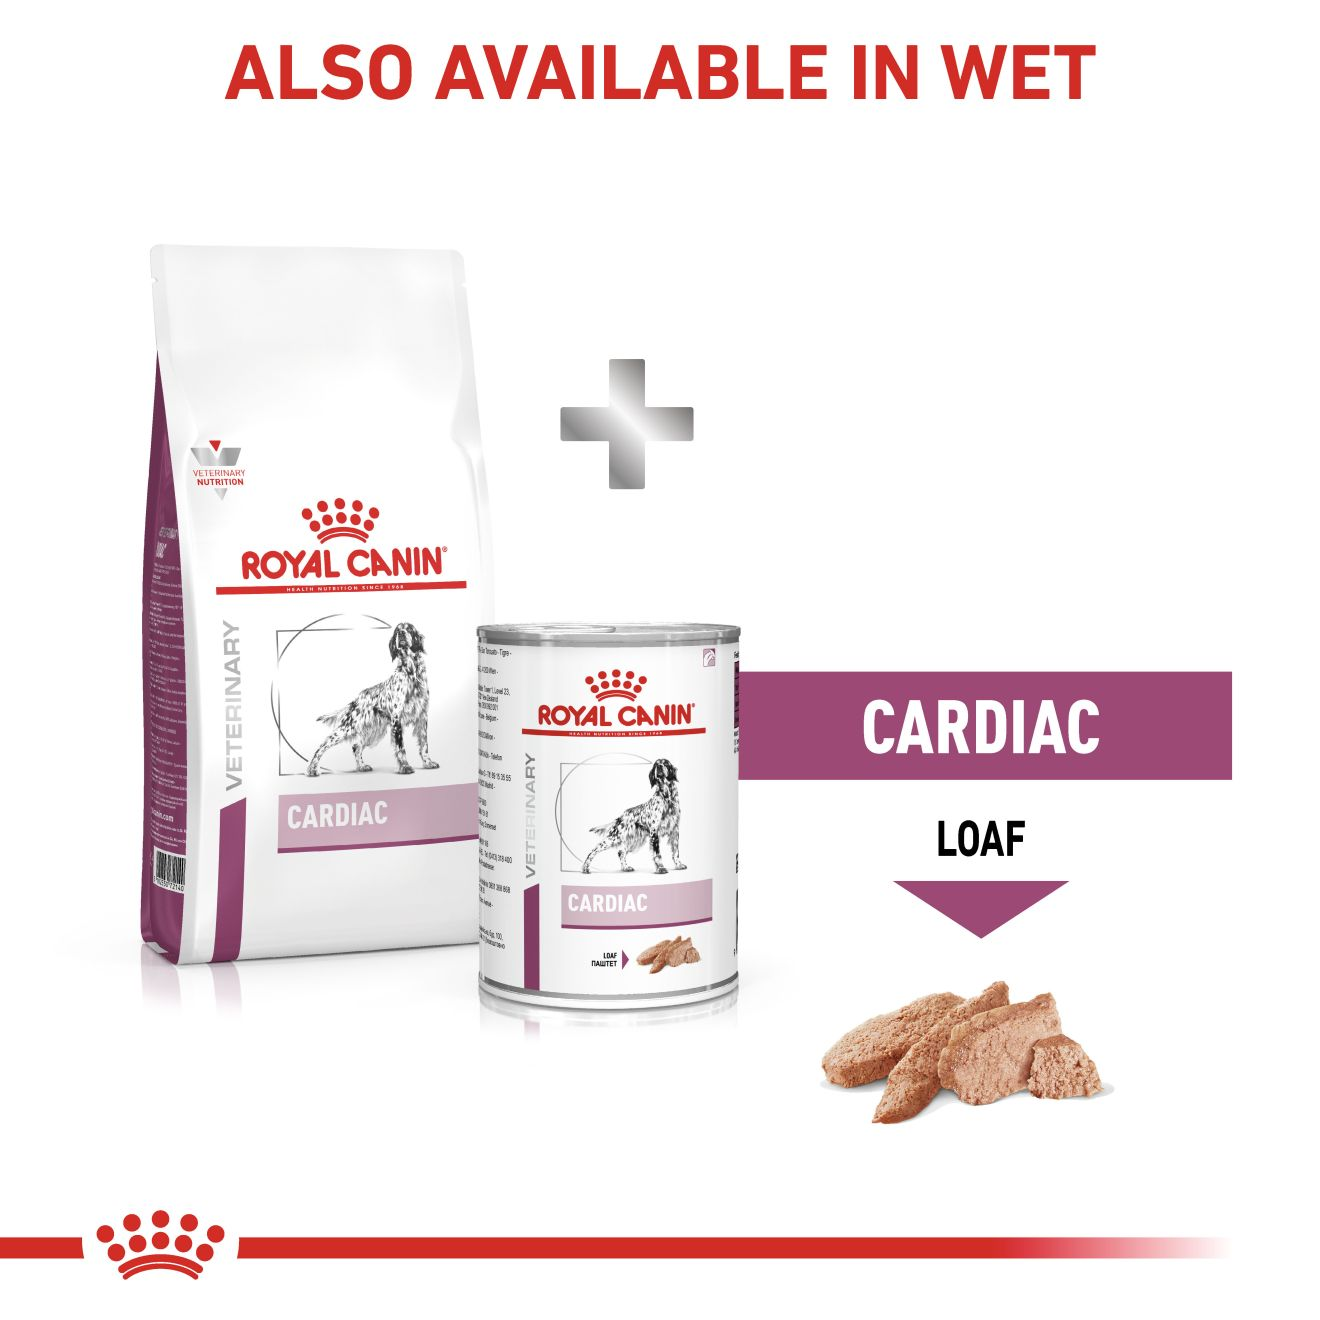 ROYAL CANIN® VETERINARY HEALTH NUTRITION CARDIAC Dry Pet Food for Dogs